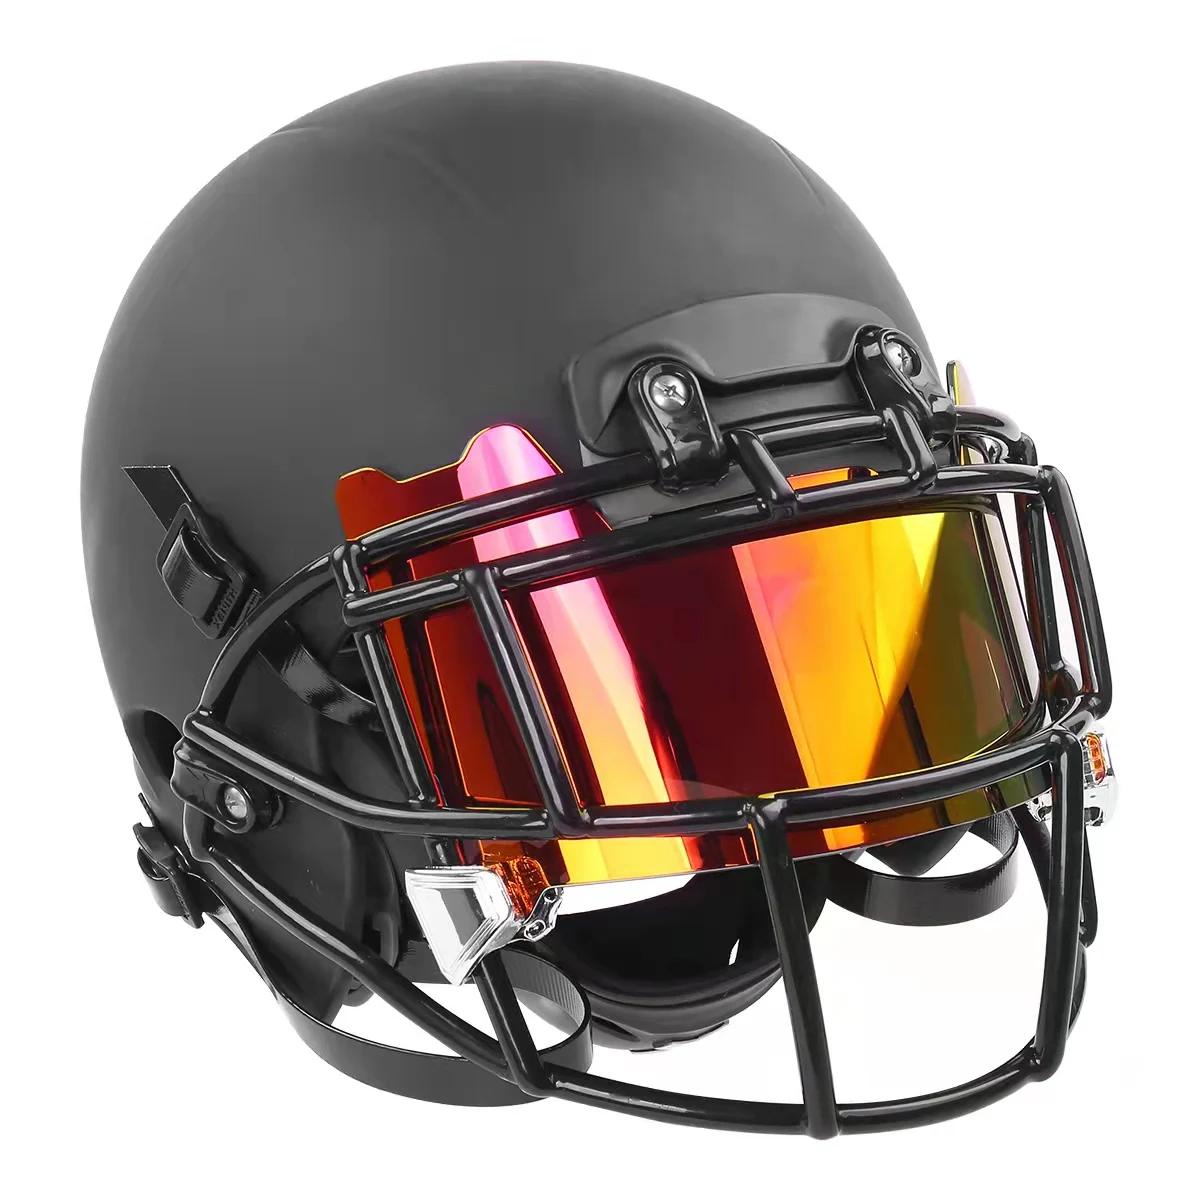 Most Popular Revo Color American Football Visor Shield American Football  Helmet Visors With Clips - Buy Football Visors Helmet,Football Eye Shield, Visor For Football Helmet Product on 